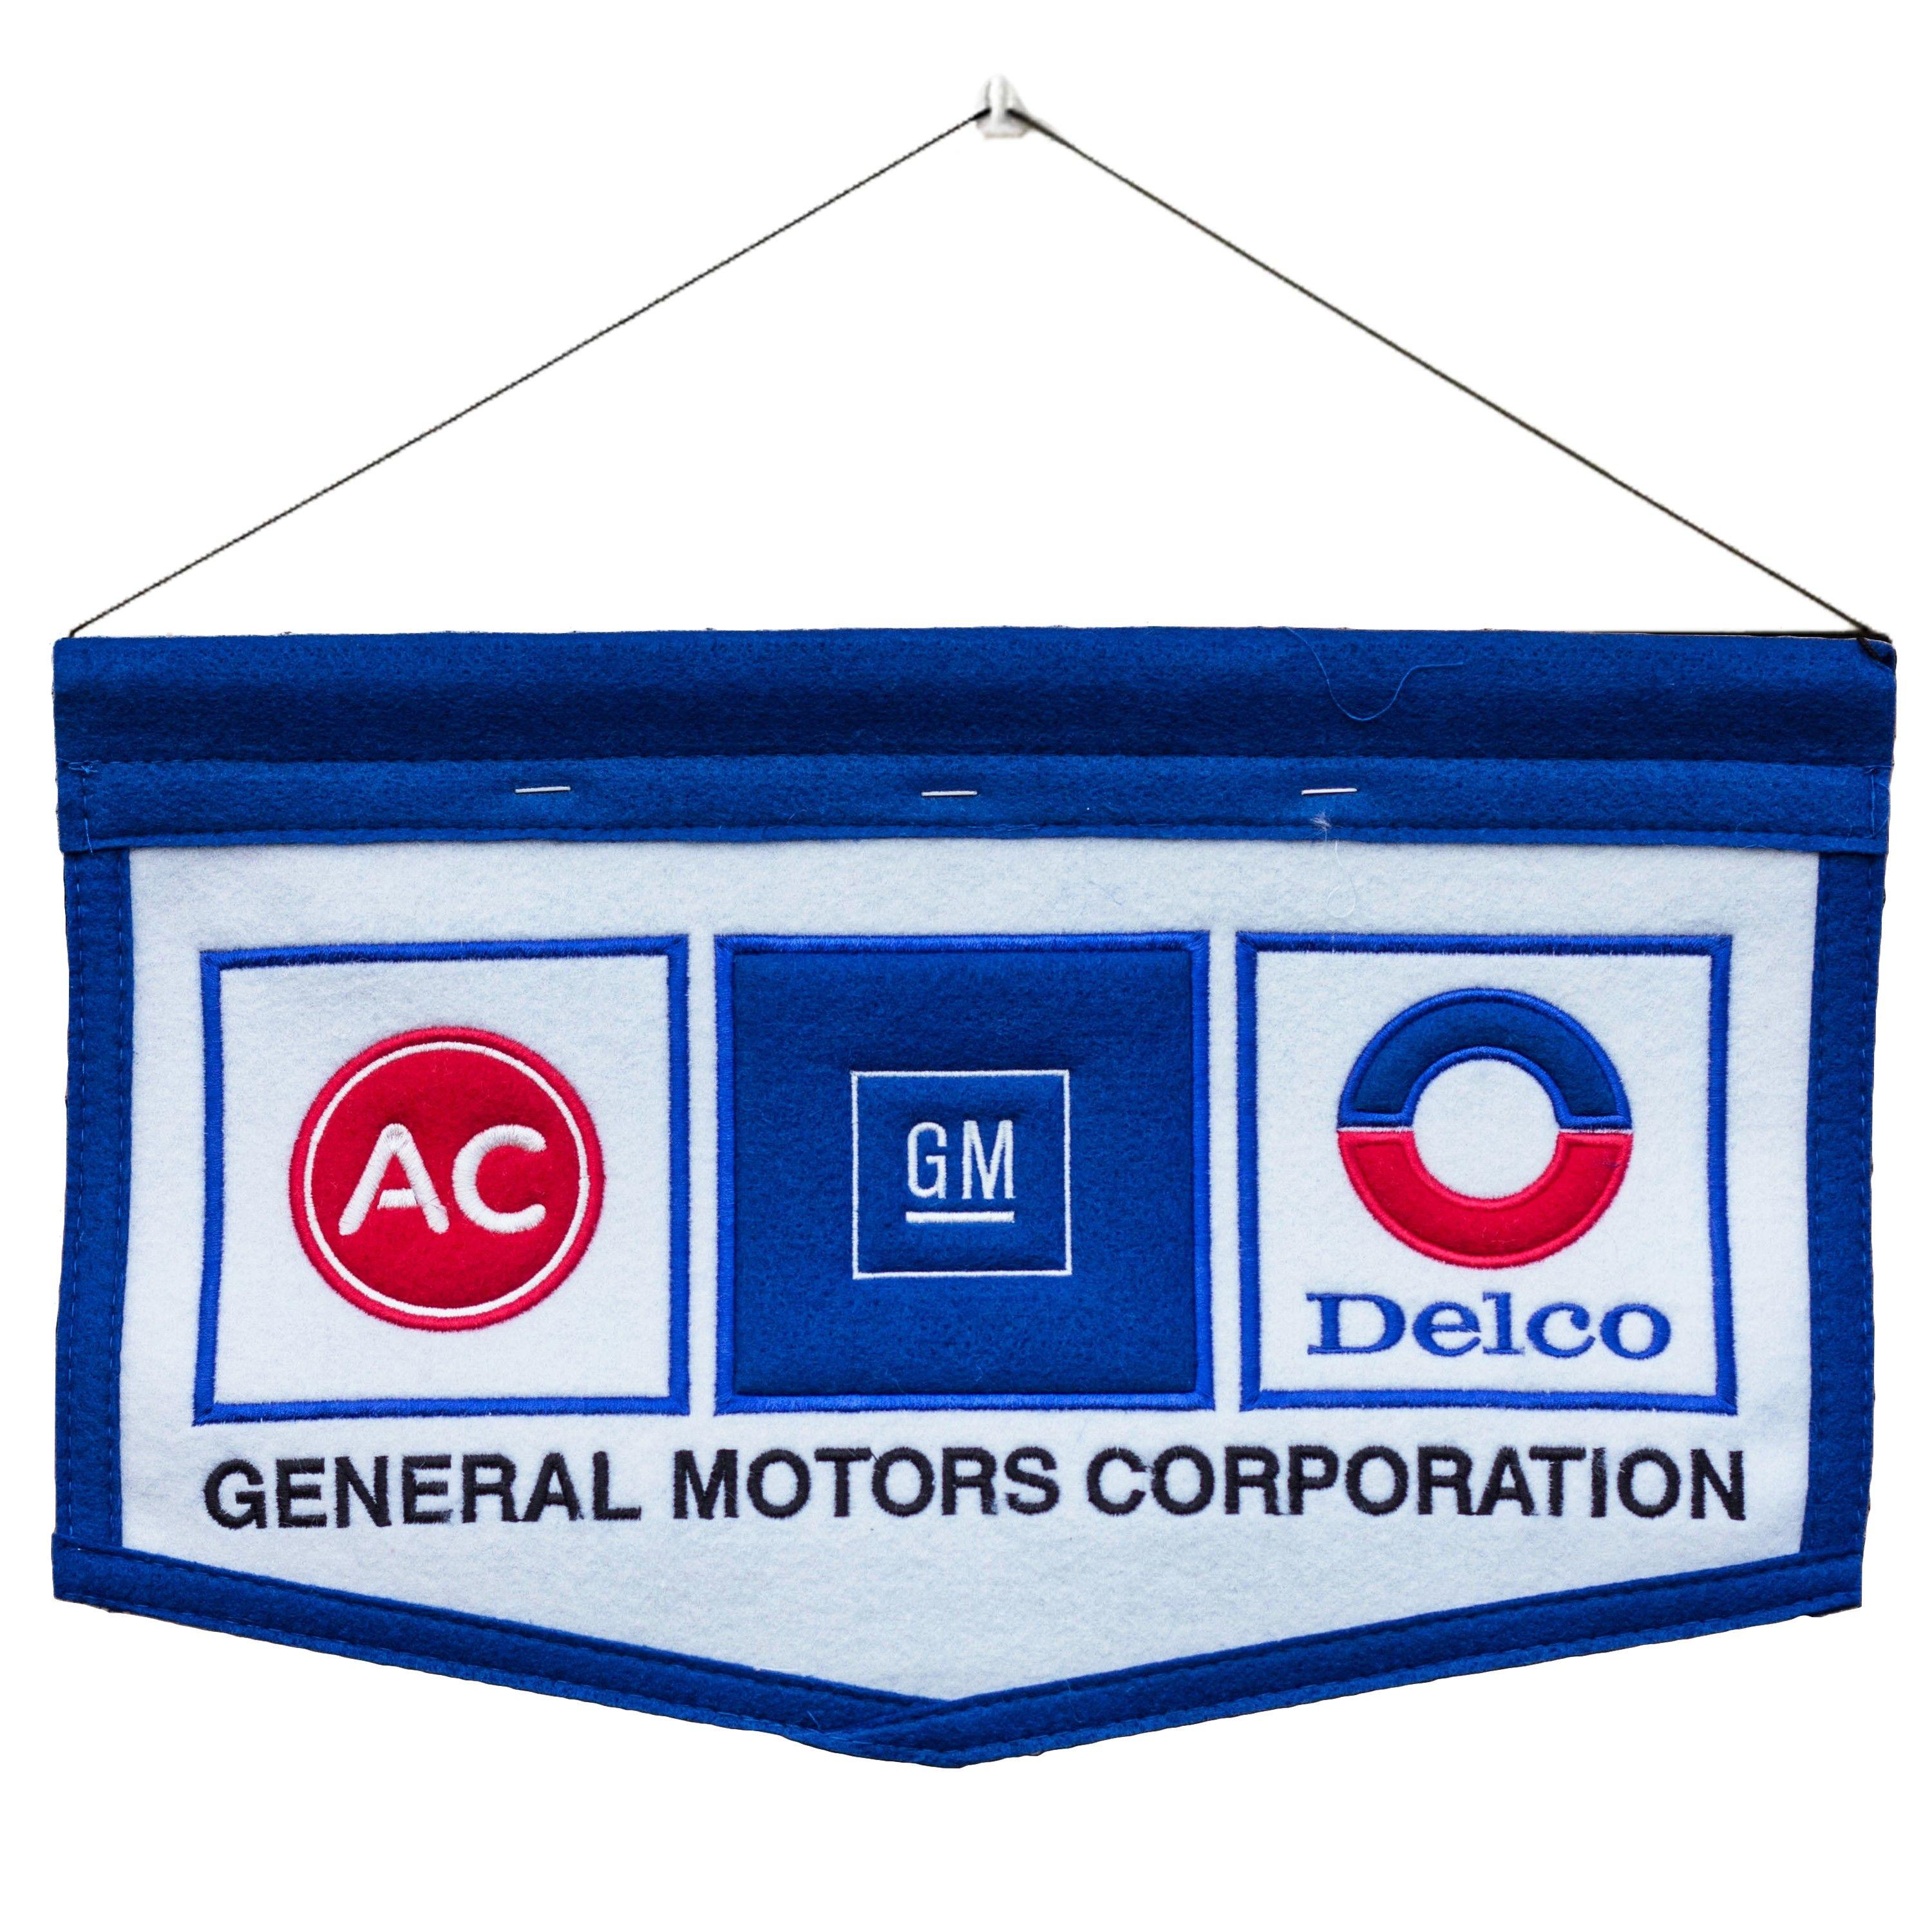 Delco Logo - AC/GM/Delco Wall Banner